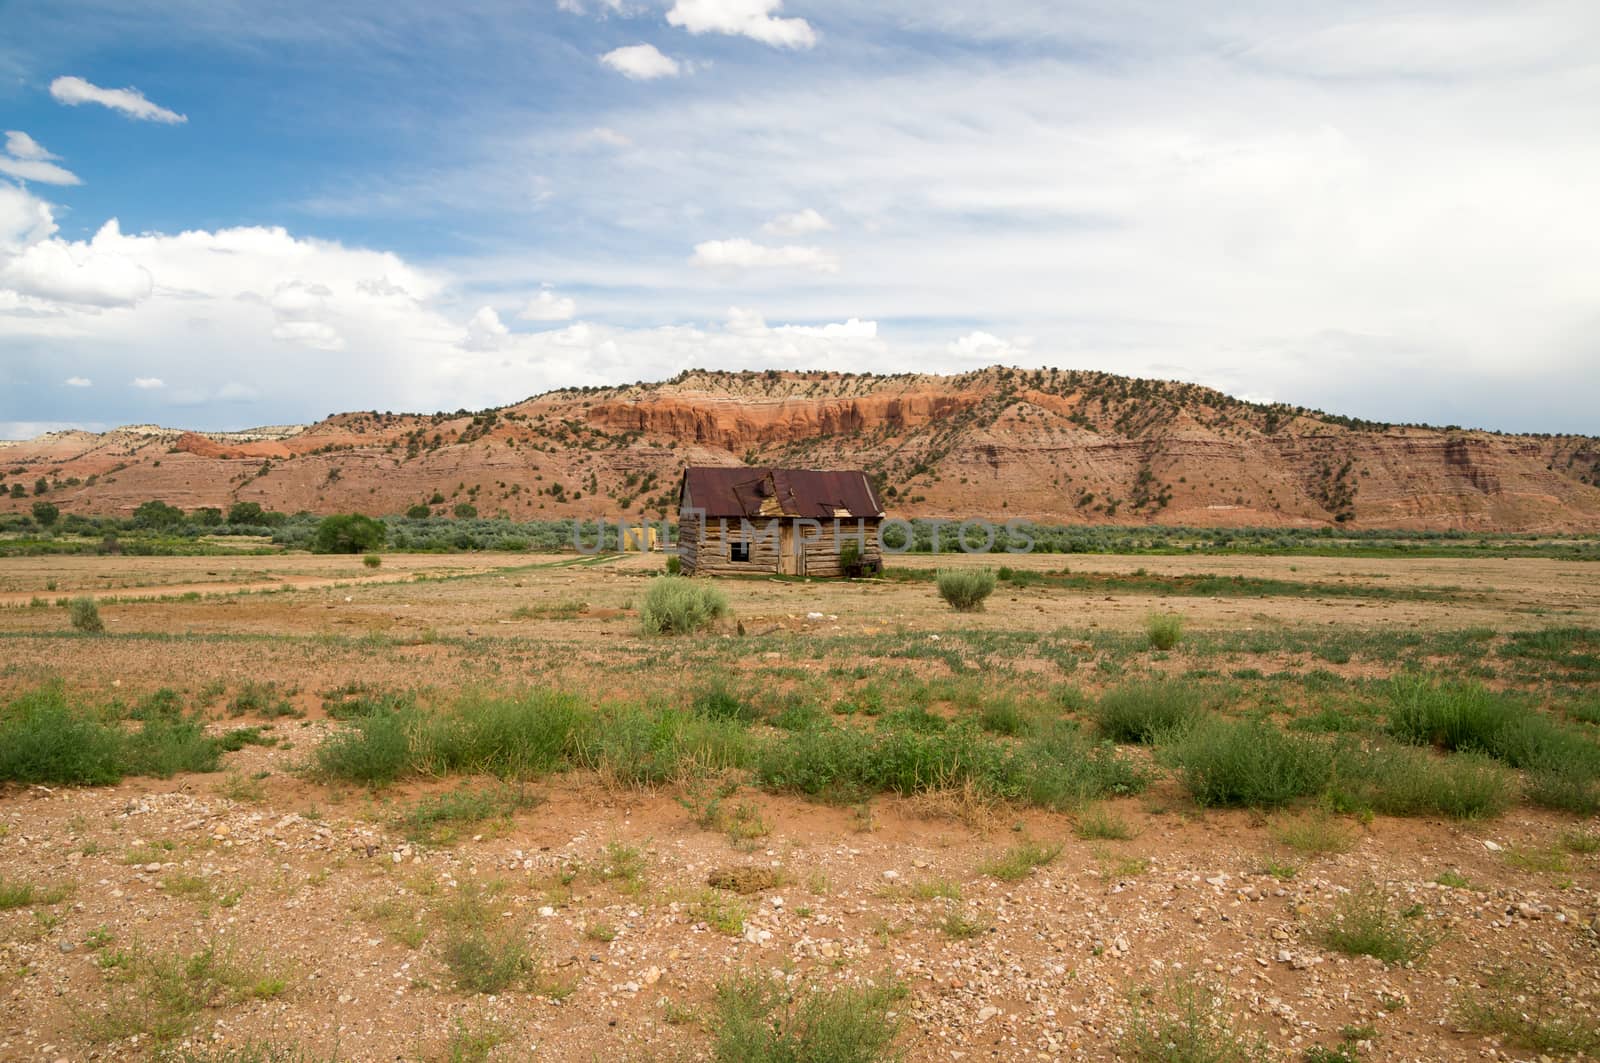 Cabin in Rural Utah by emattil